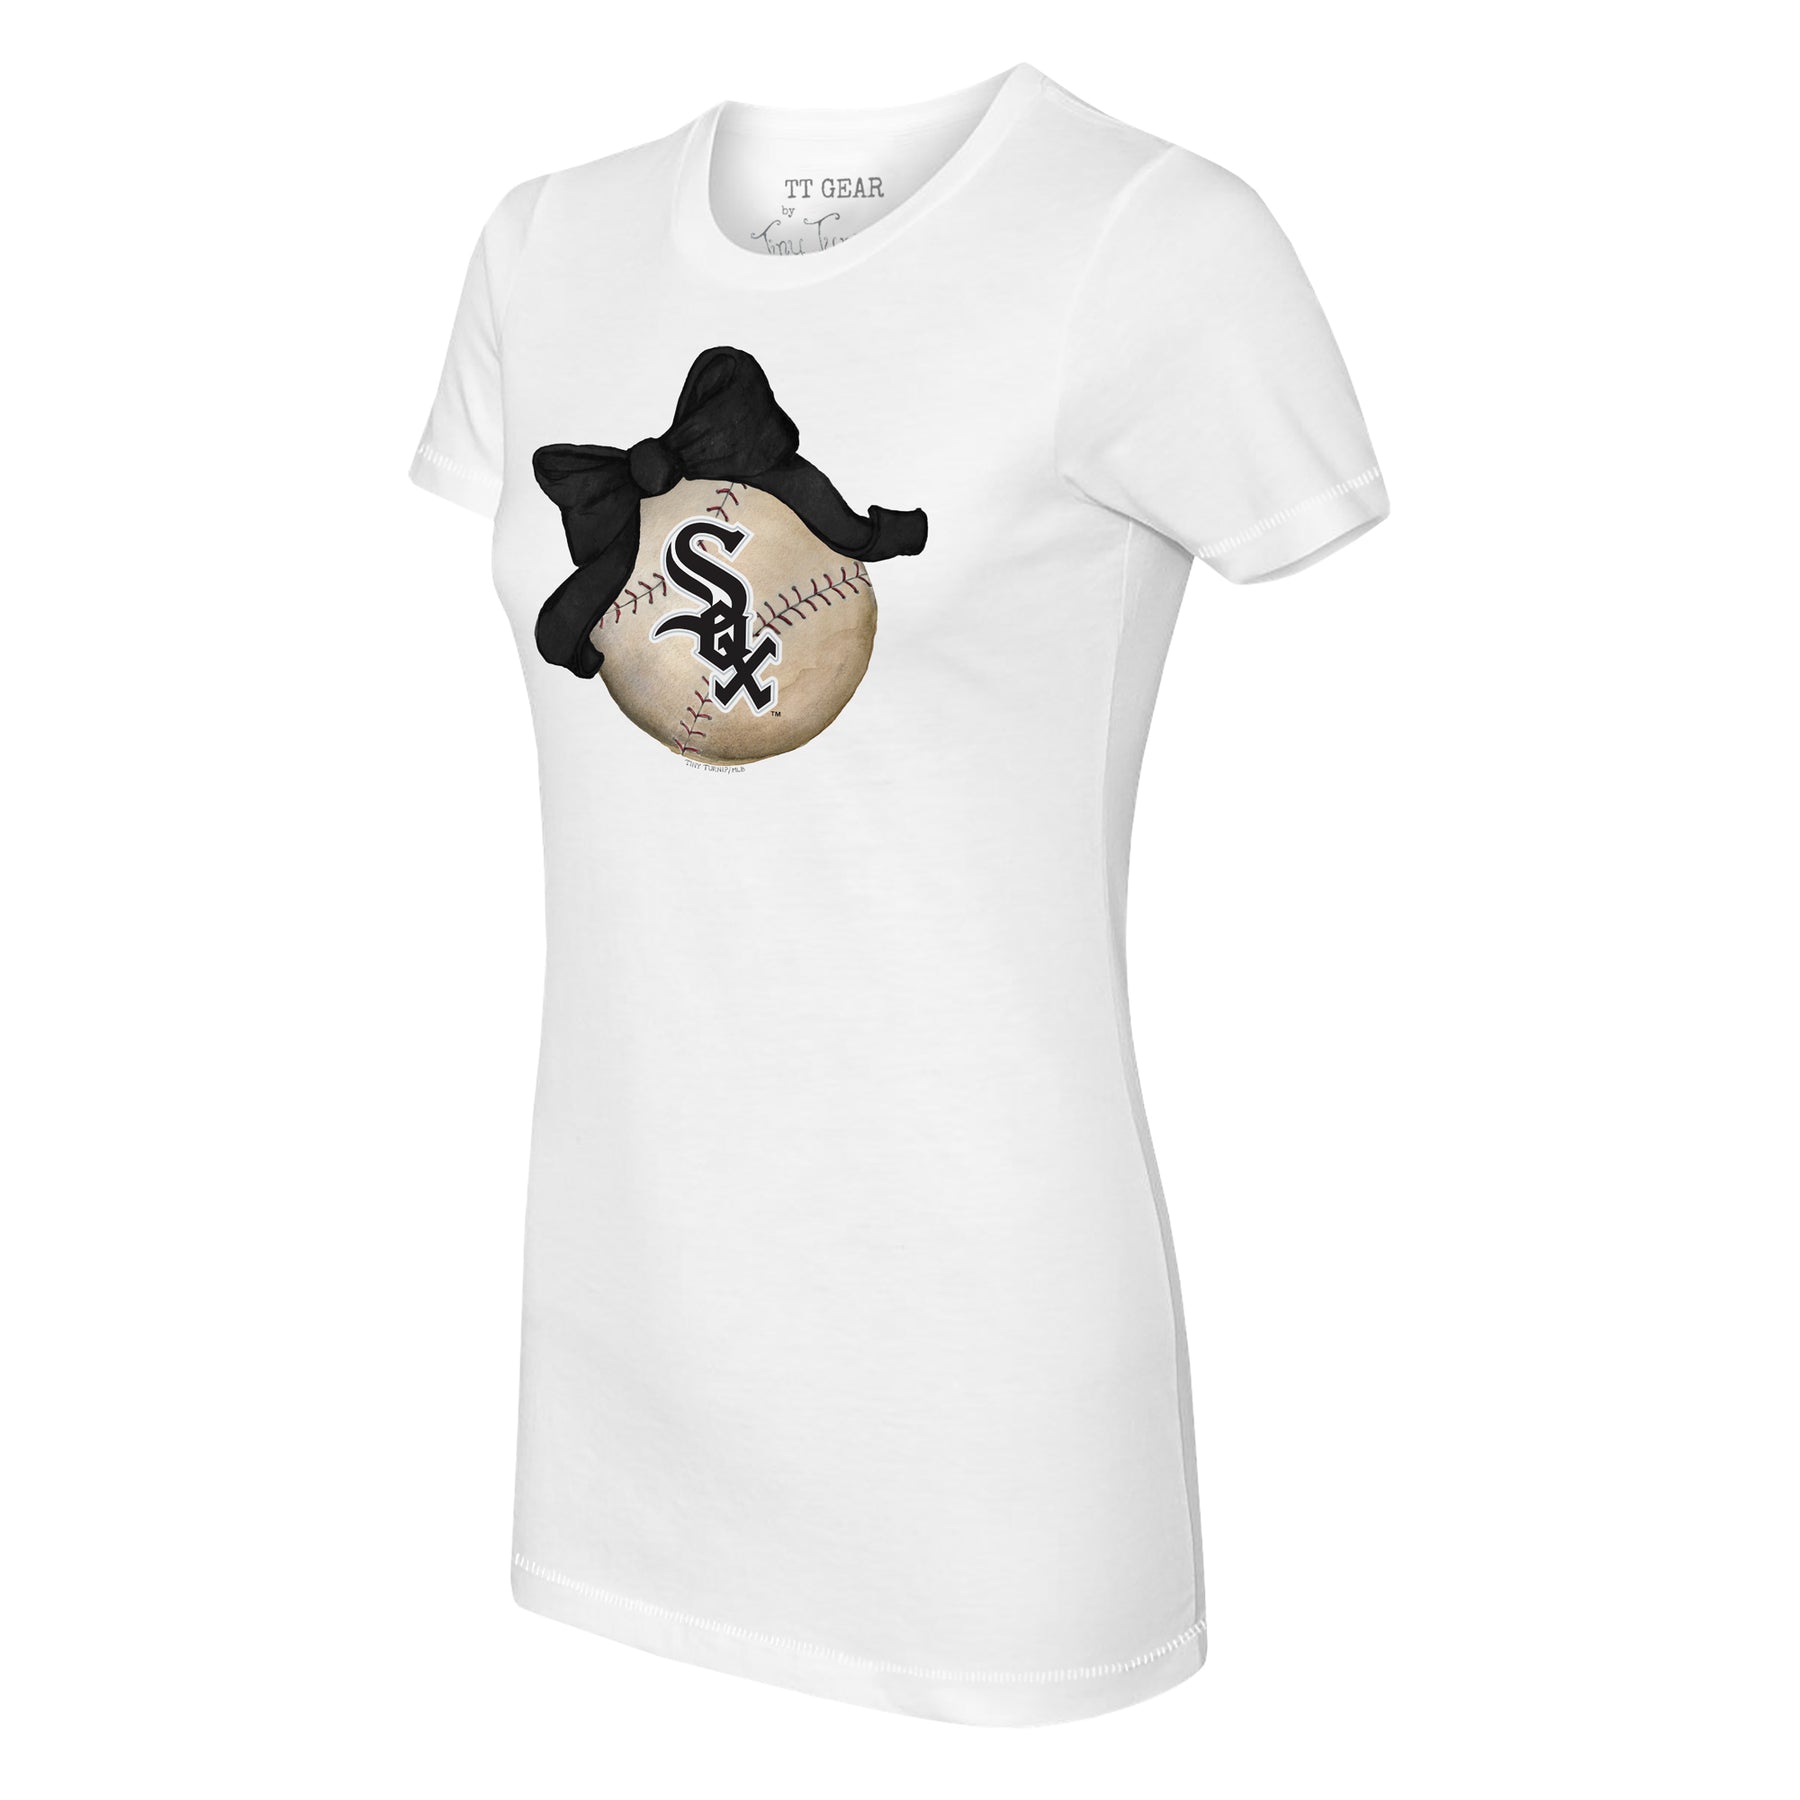 Women's Tiny Turnip White Chicago Sox James T-Shirt Size: Extra Small